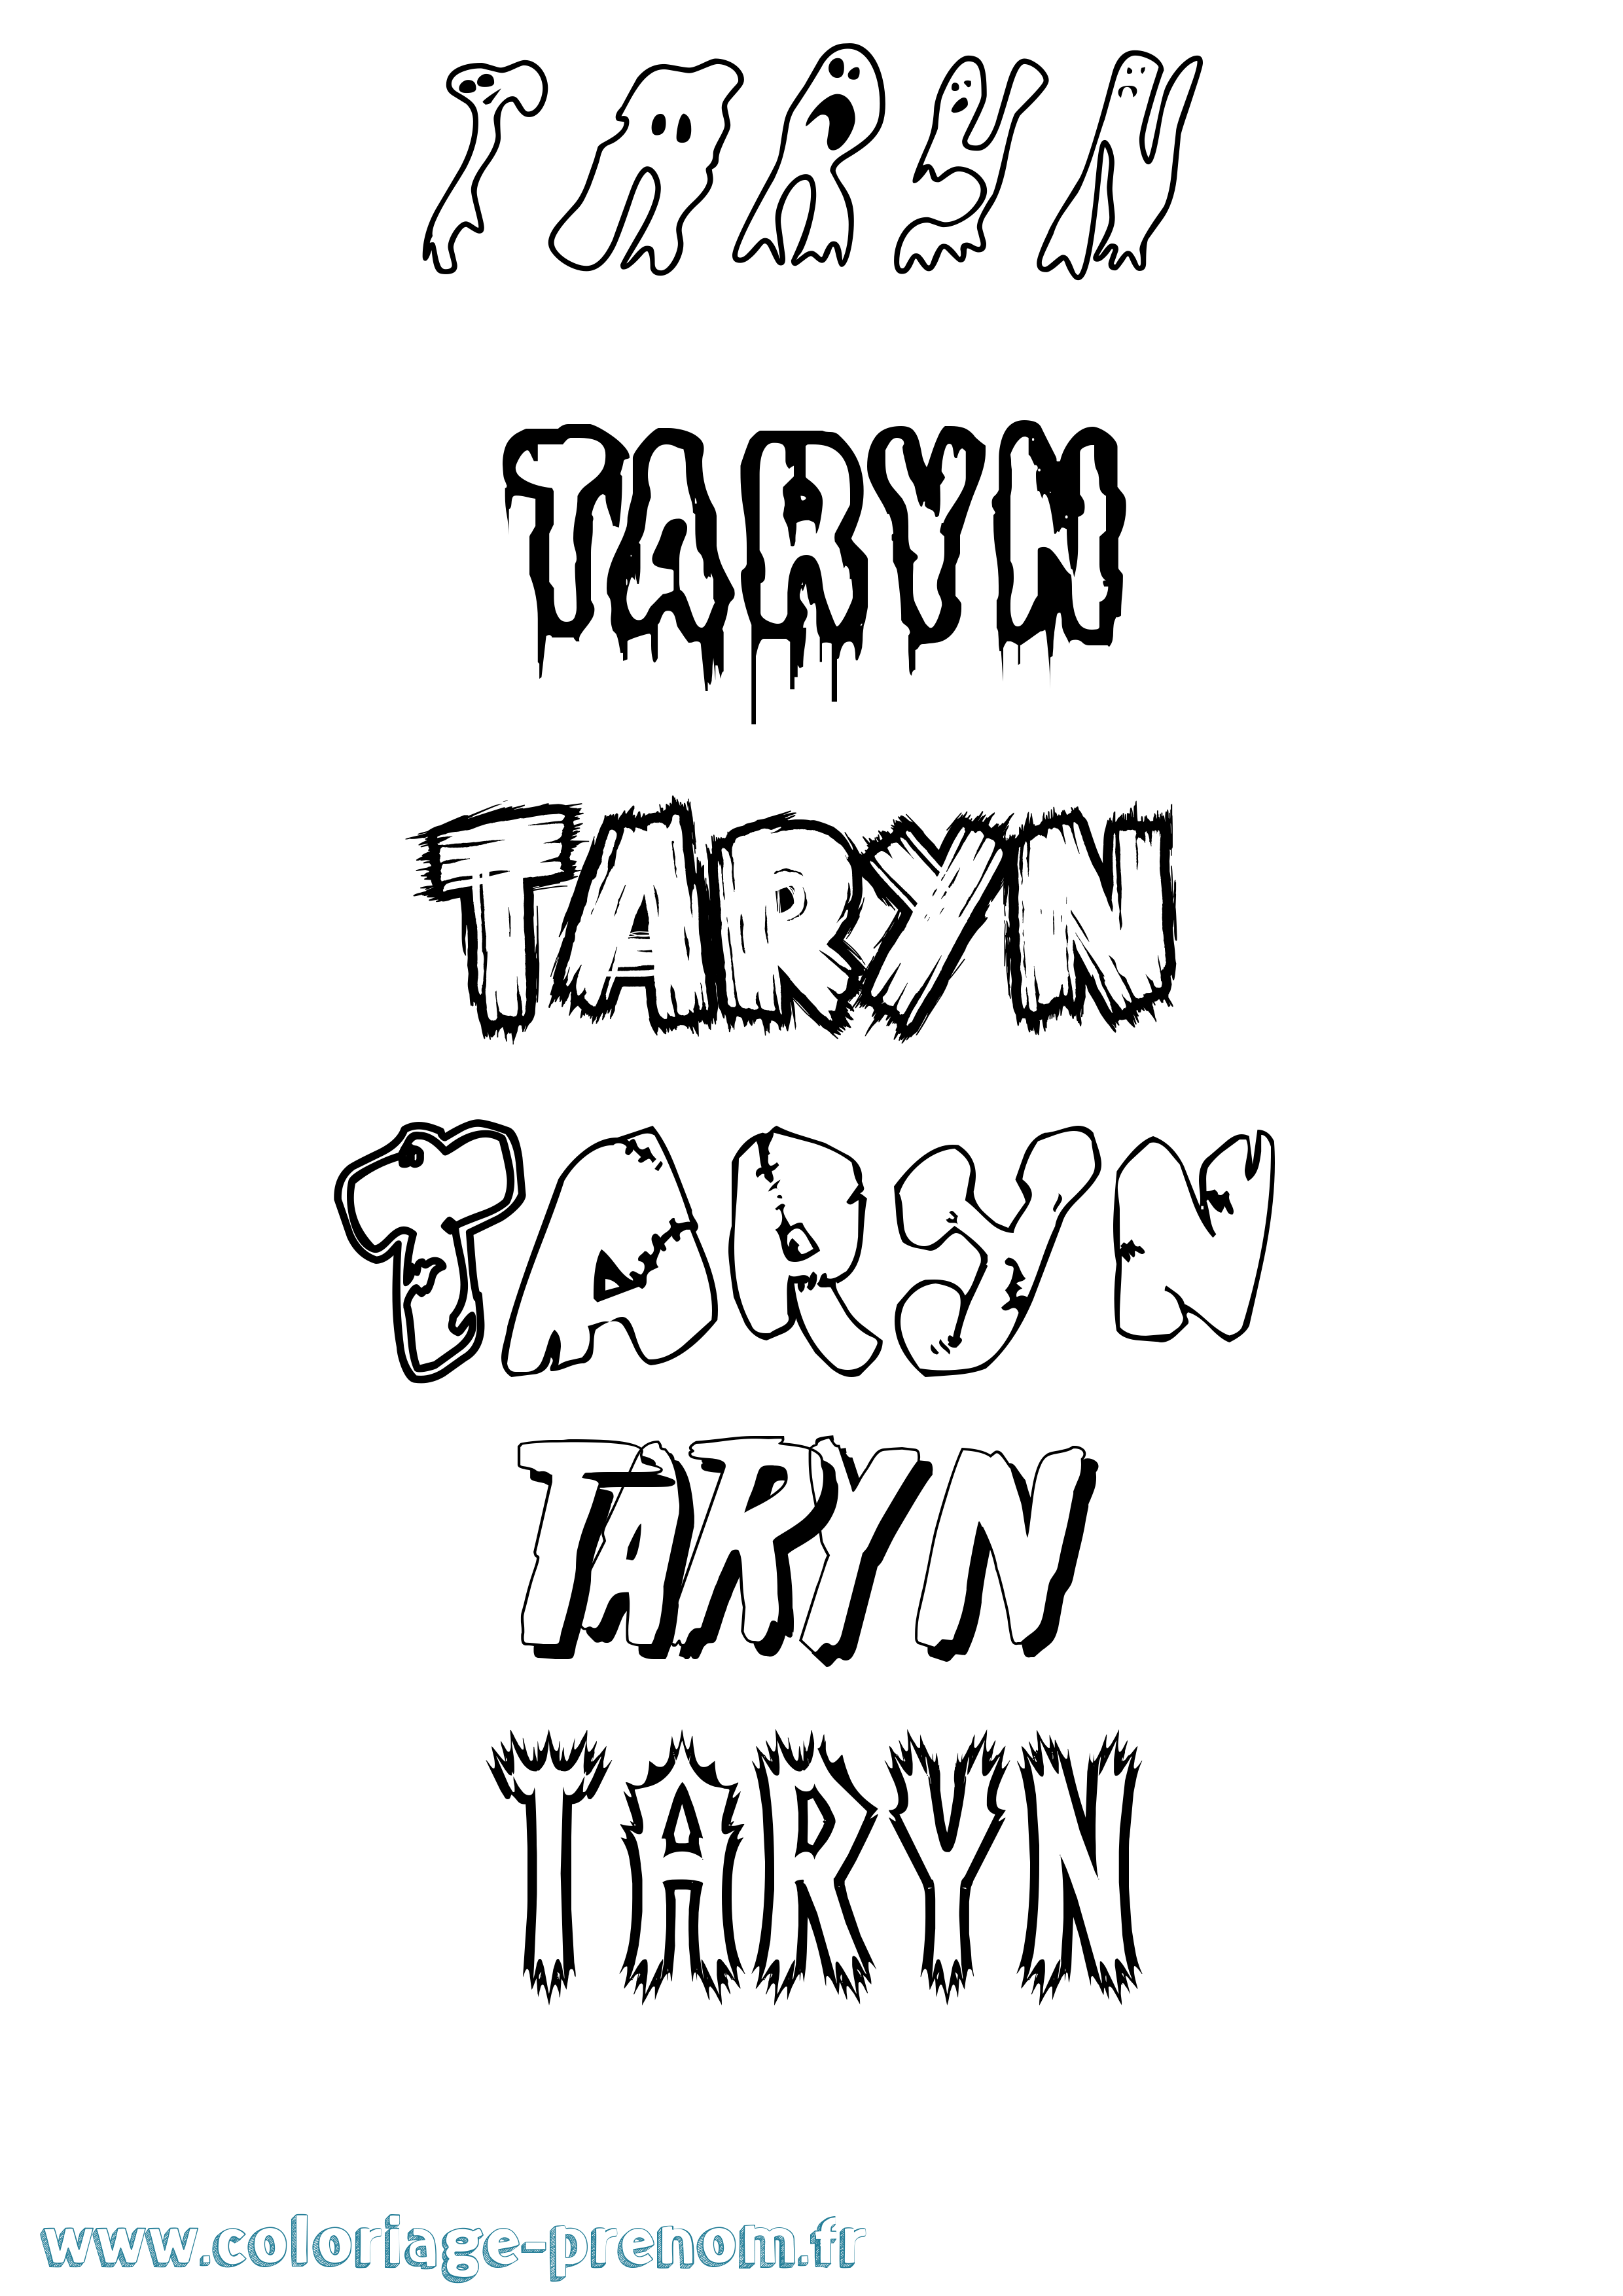 Coloriage prénom Taryn Frisson